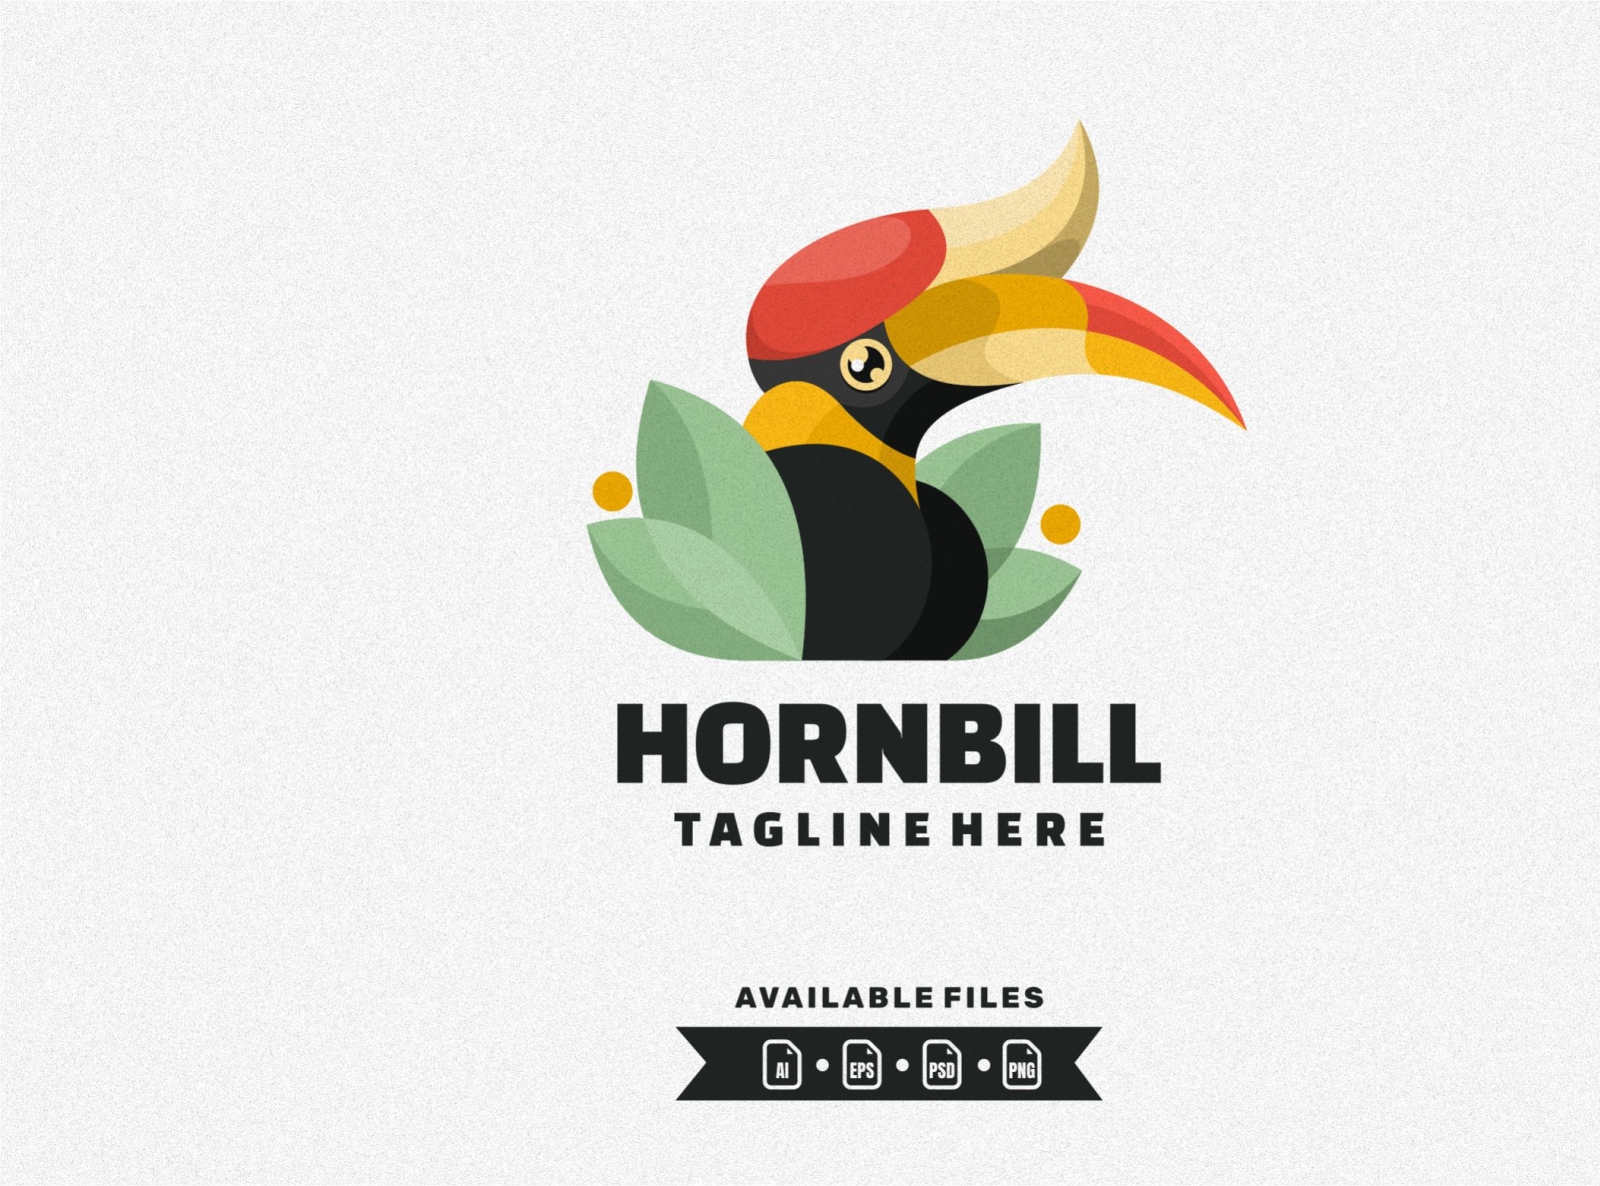 Hornbill Logo png images | PNGEgg